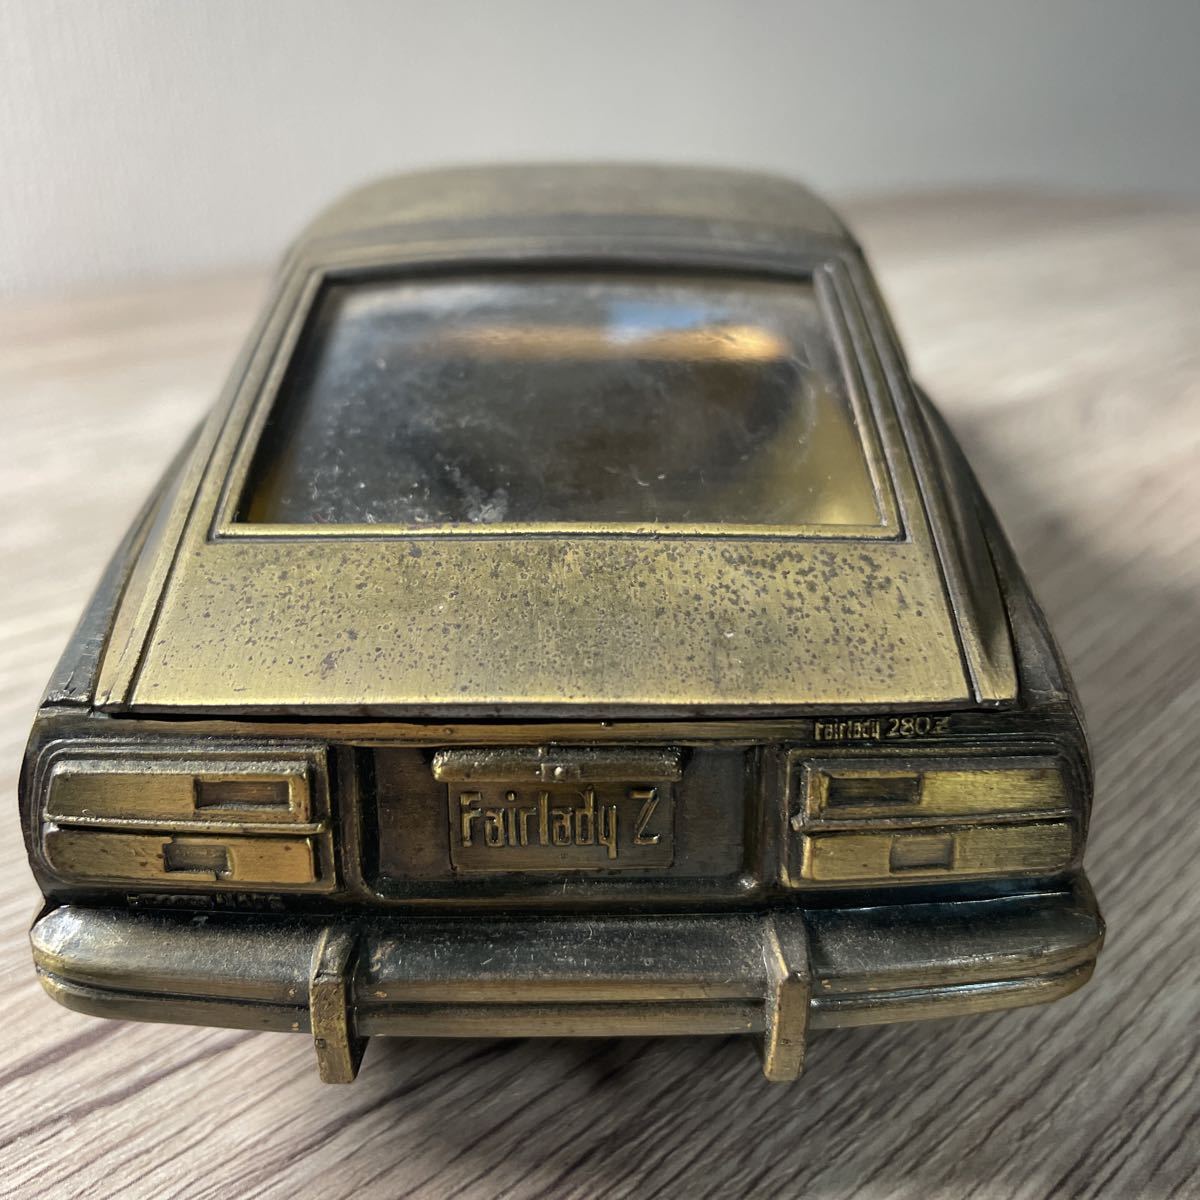  retro made of metal copper NISSAN Nissan Fairlady 2800Z cigarette case minicar cigarettes ..